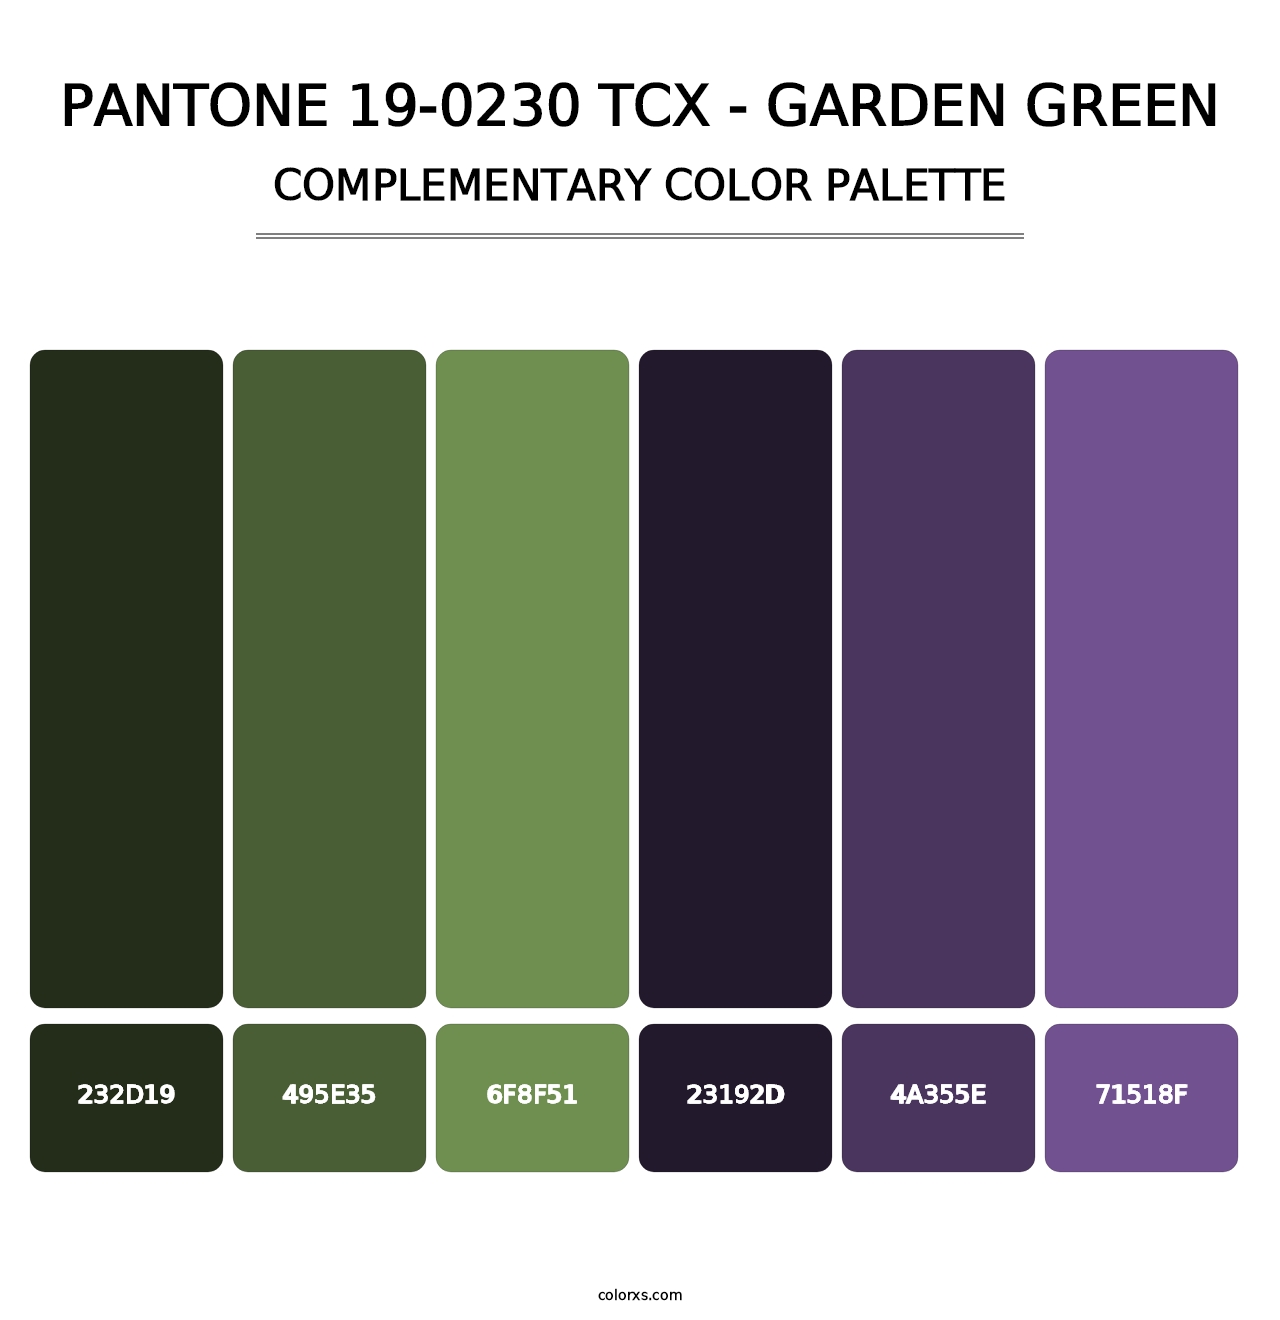 PANTONE 19-0230 TCX - Garden Green - Complementary Color Palette